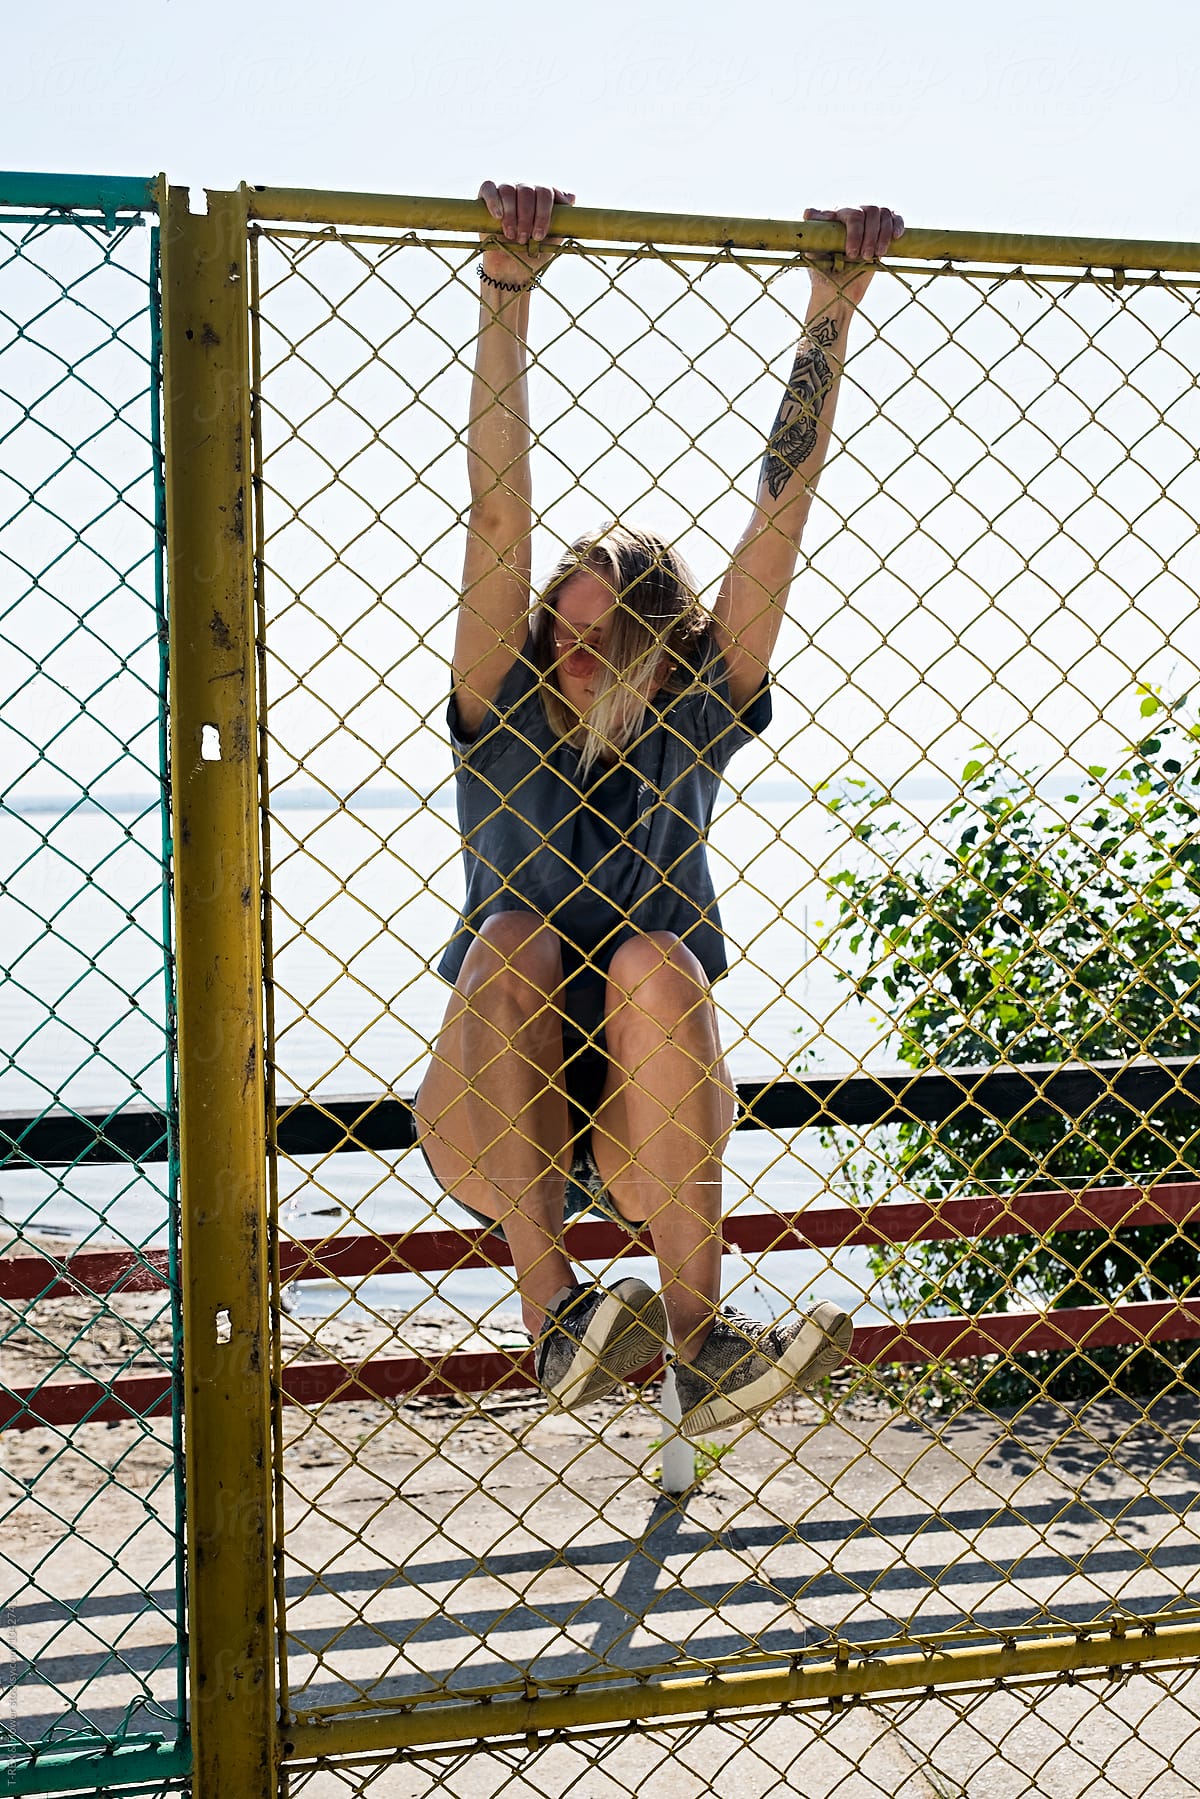 Blonde Wild Girl With Tattoo Climbing The Fence By Stocksy Contributor Danil Nevsky Stocksy